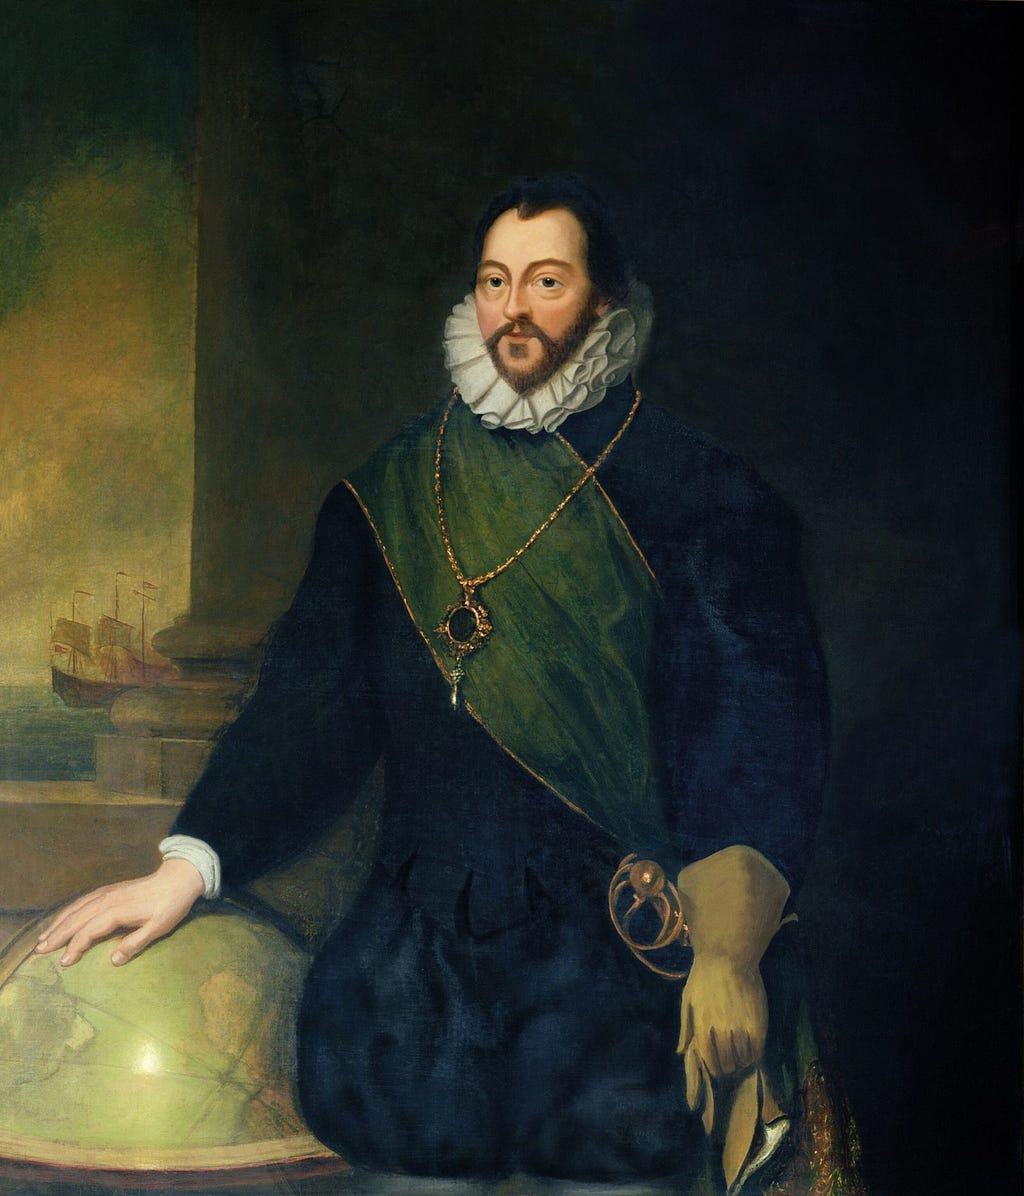 A portrait of Francis Drake